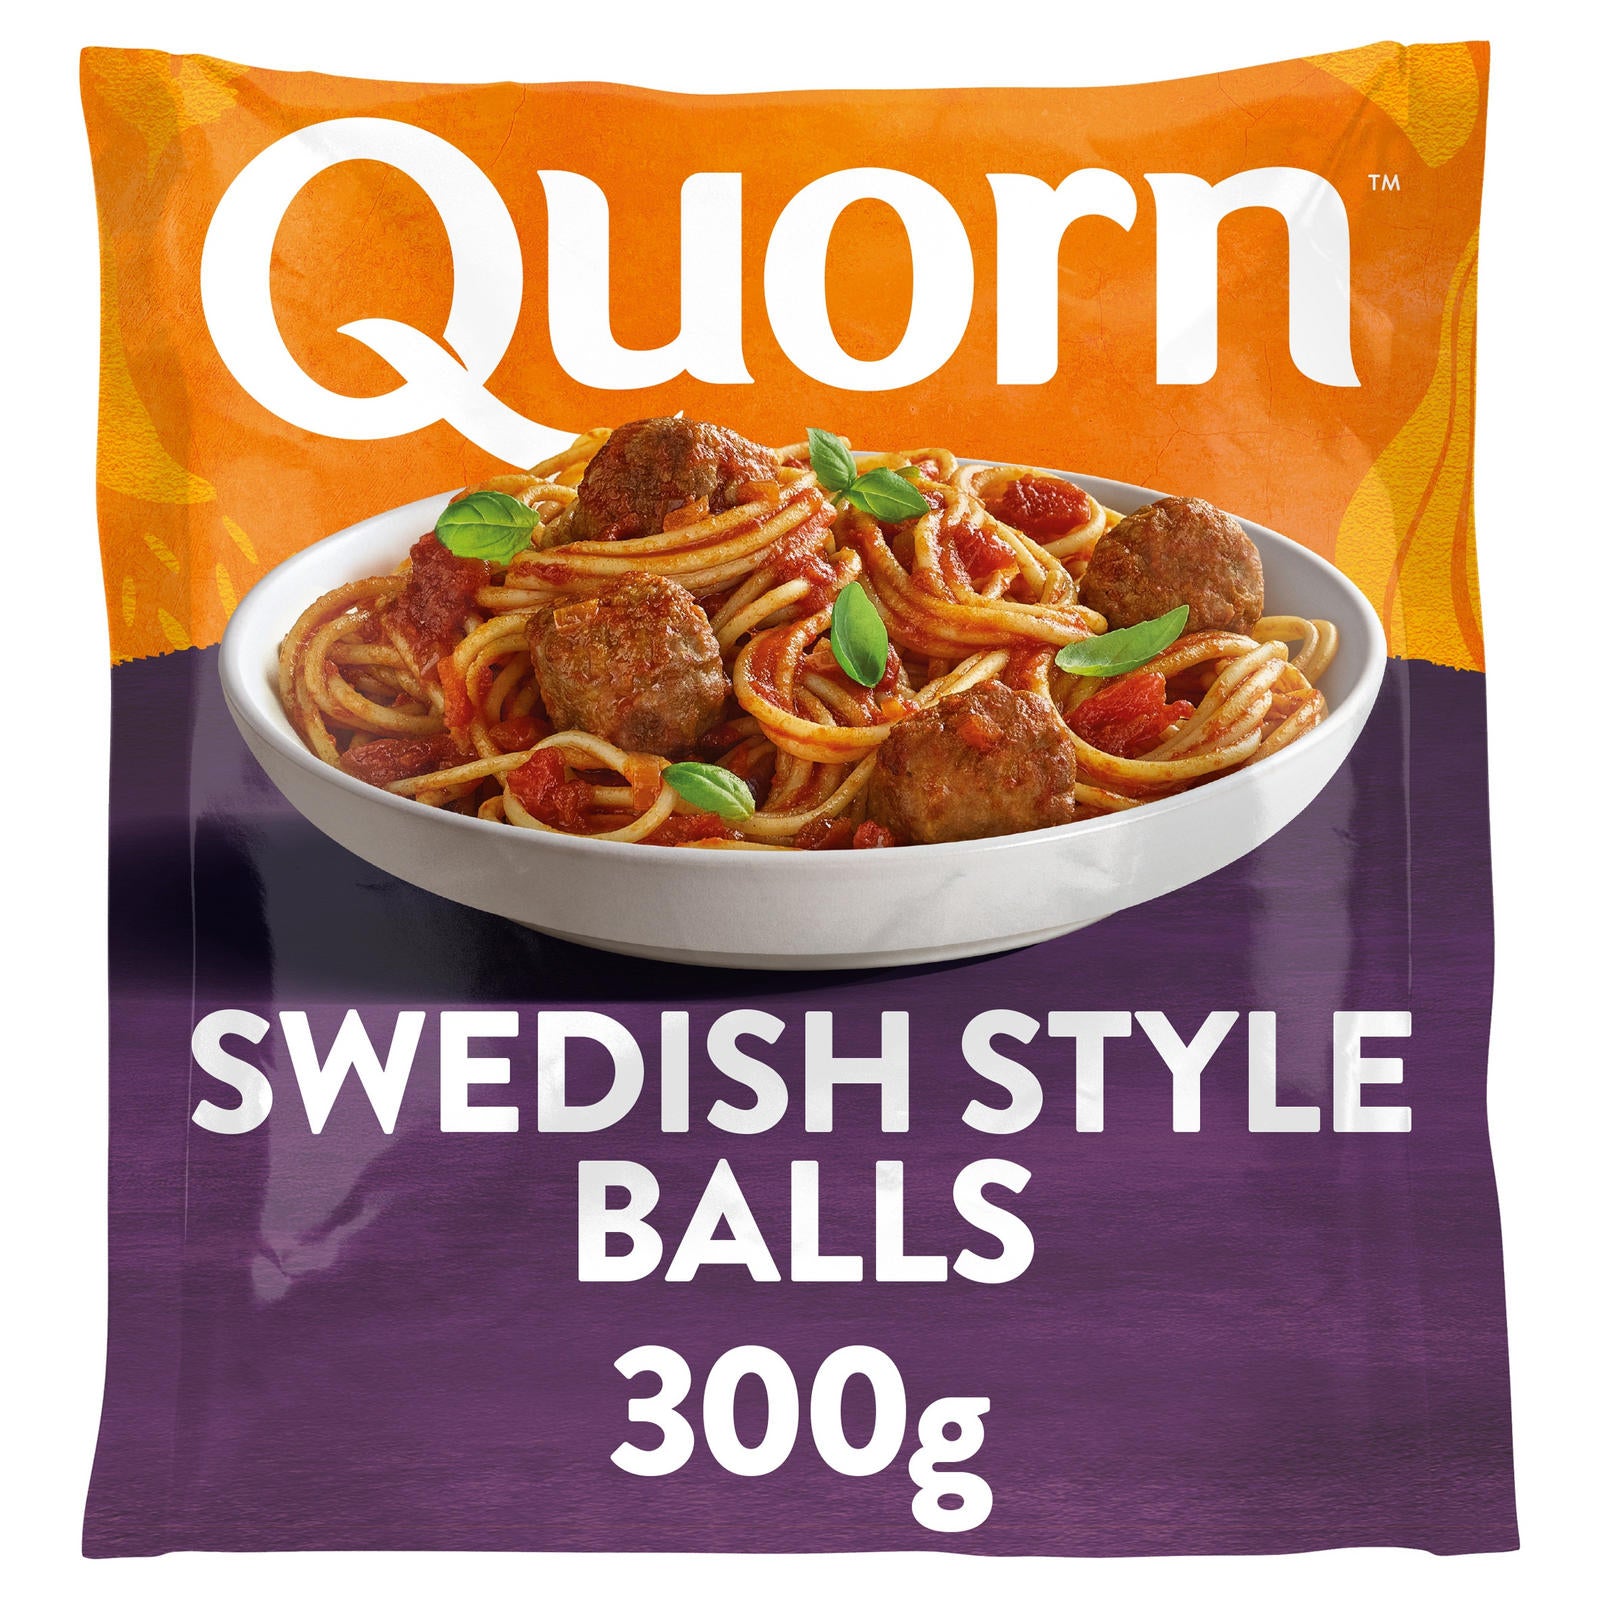 QUORN Meat Free Swedish Style Balls, 300g - Vegan